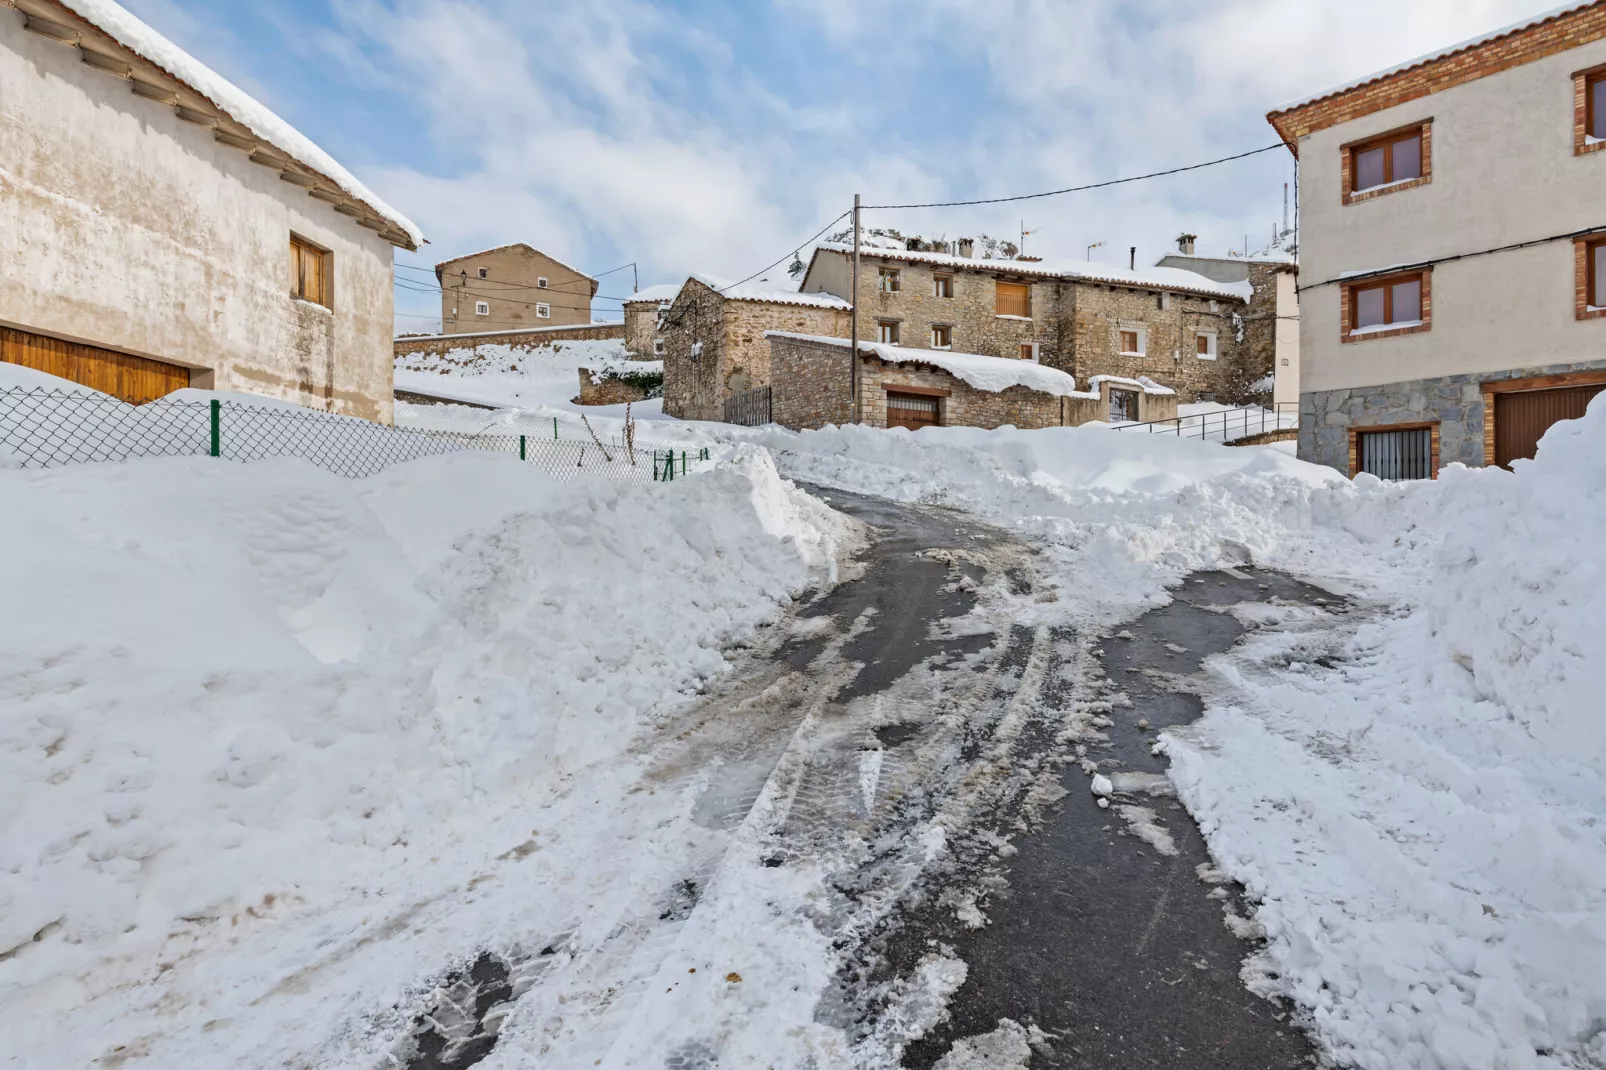 Apartamento Sierra de Gudar-Gebied winter 1km